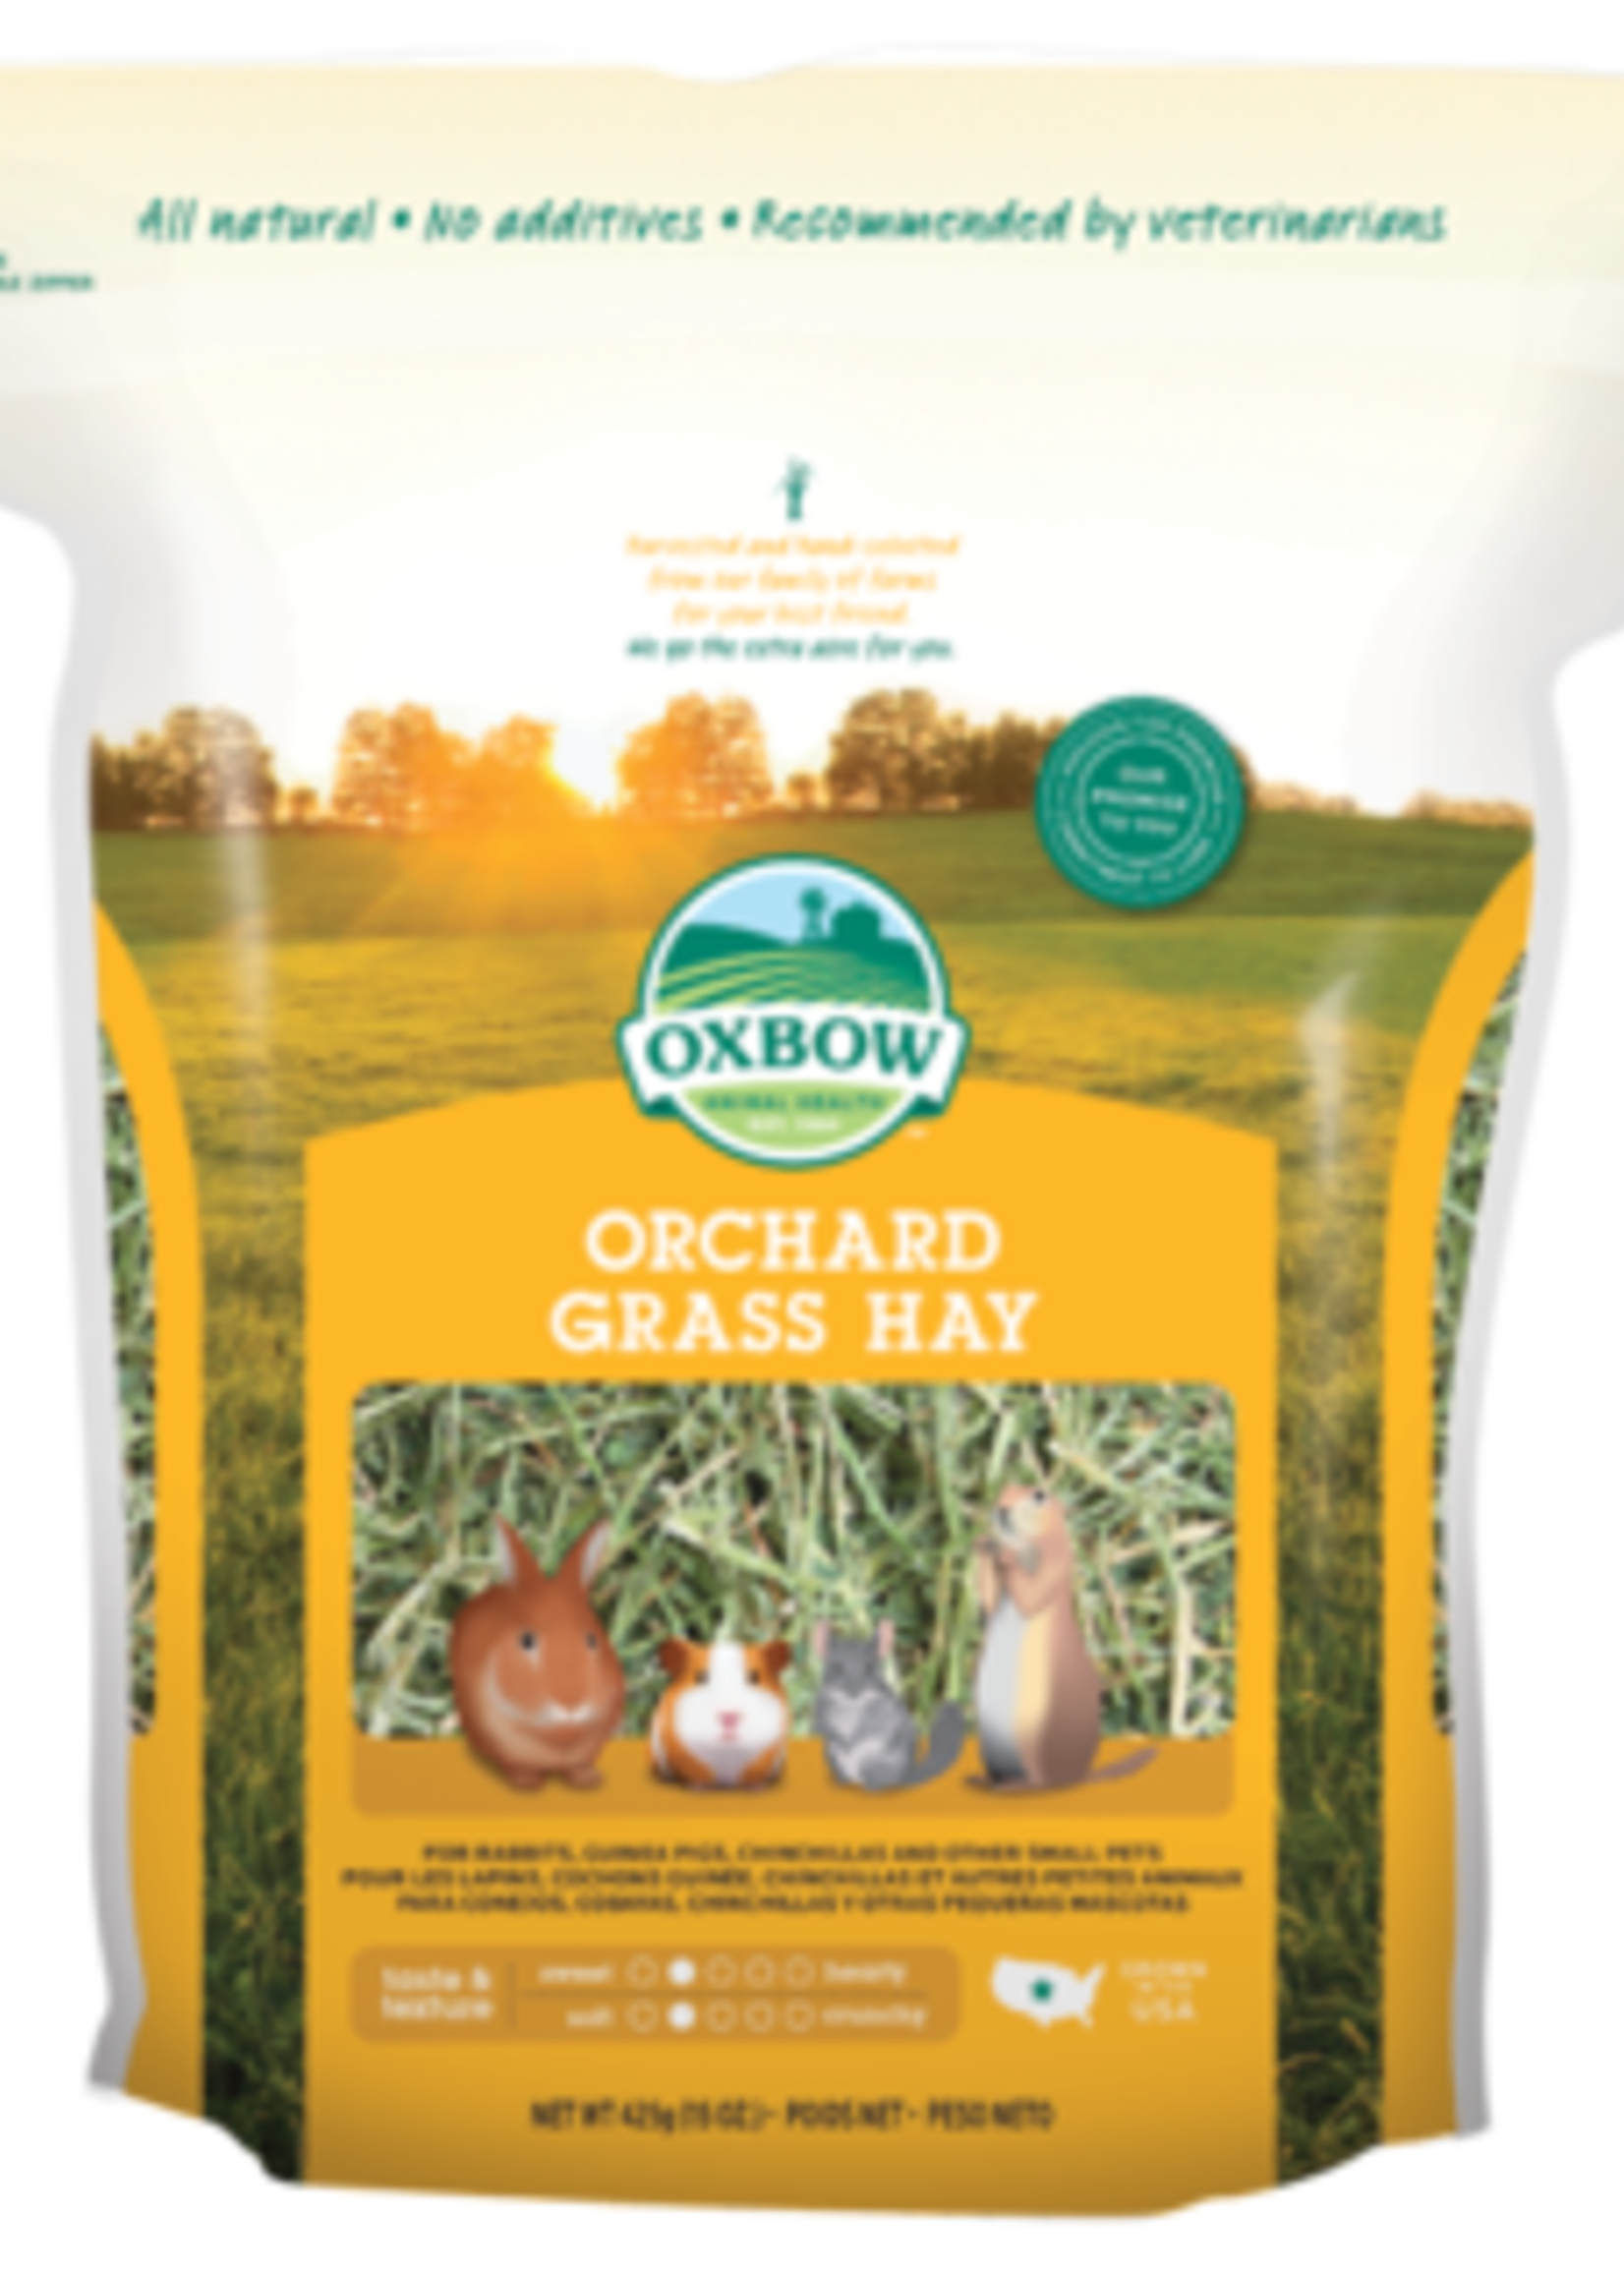 Oxbow Animal Health™ OXBOW ORCHARD GRASS HAY 40oz